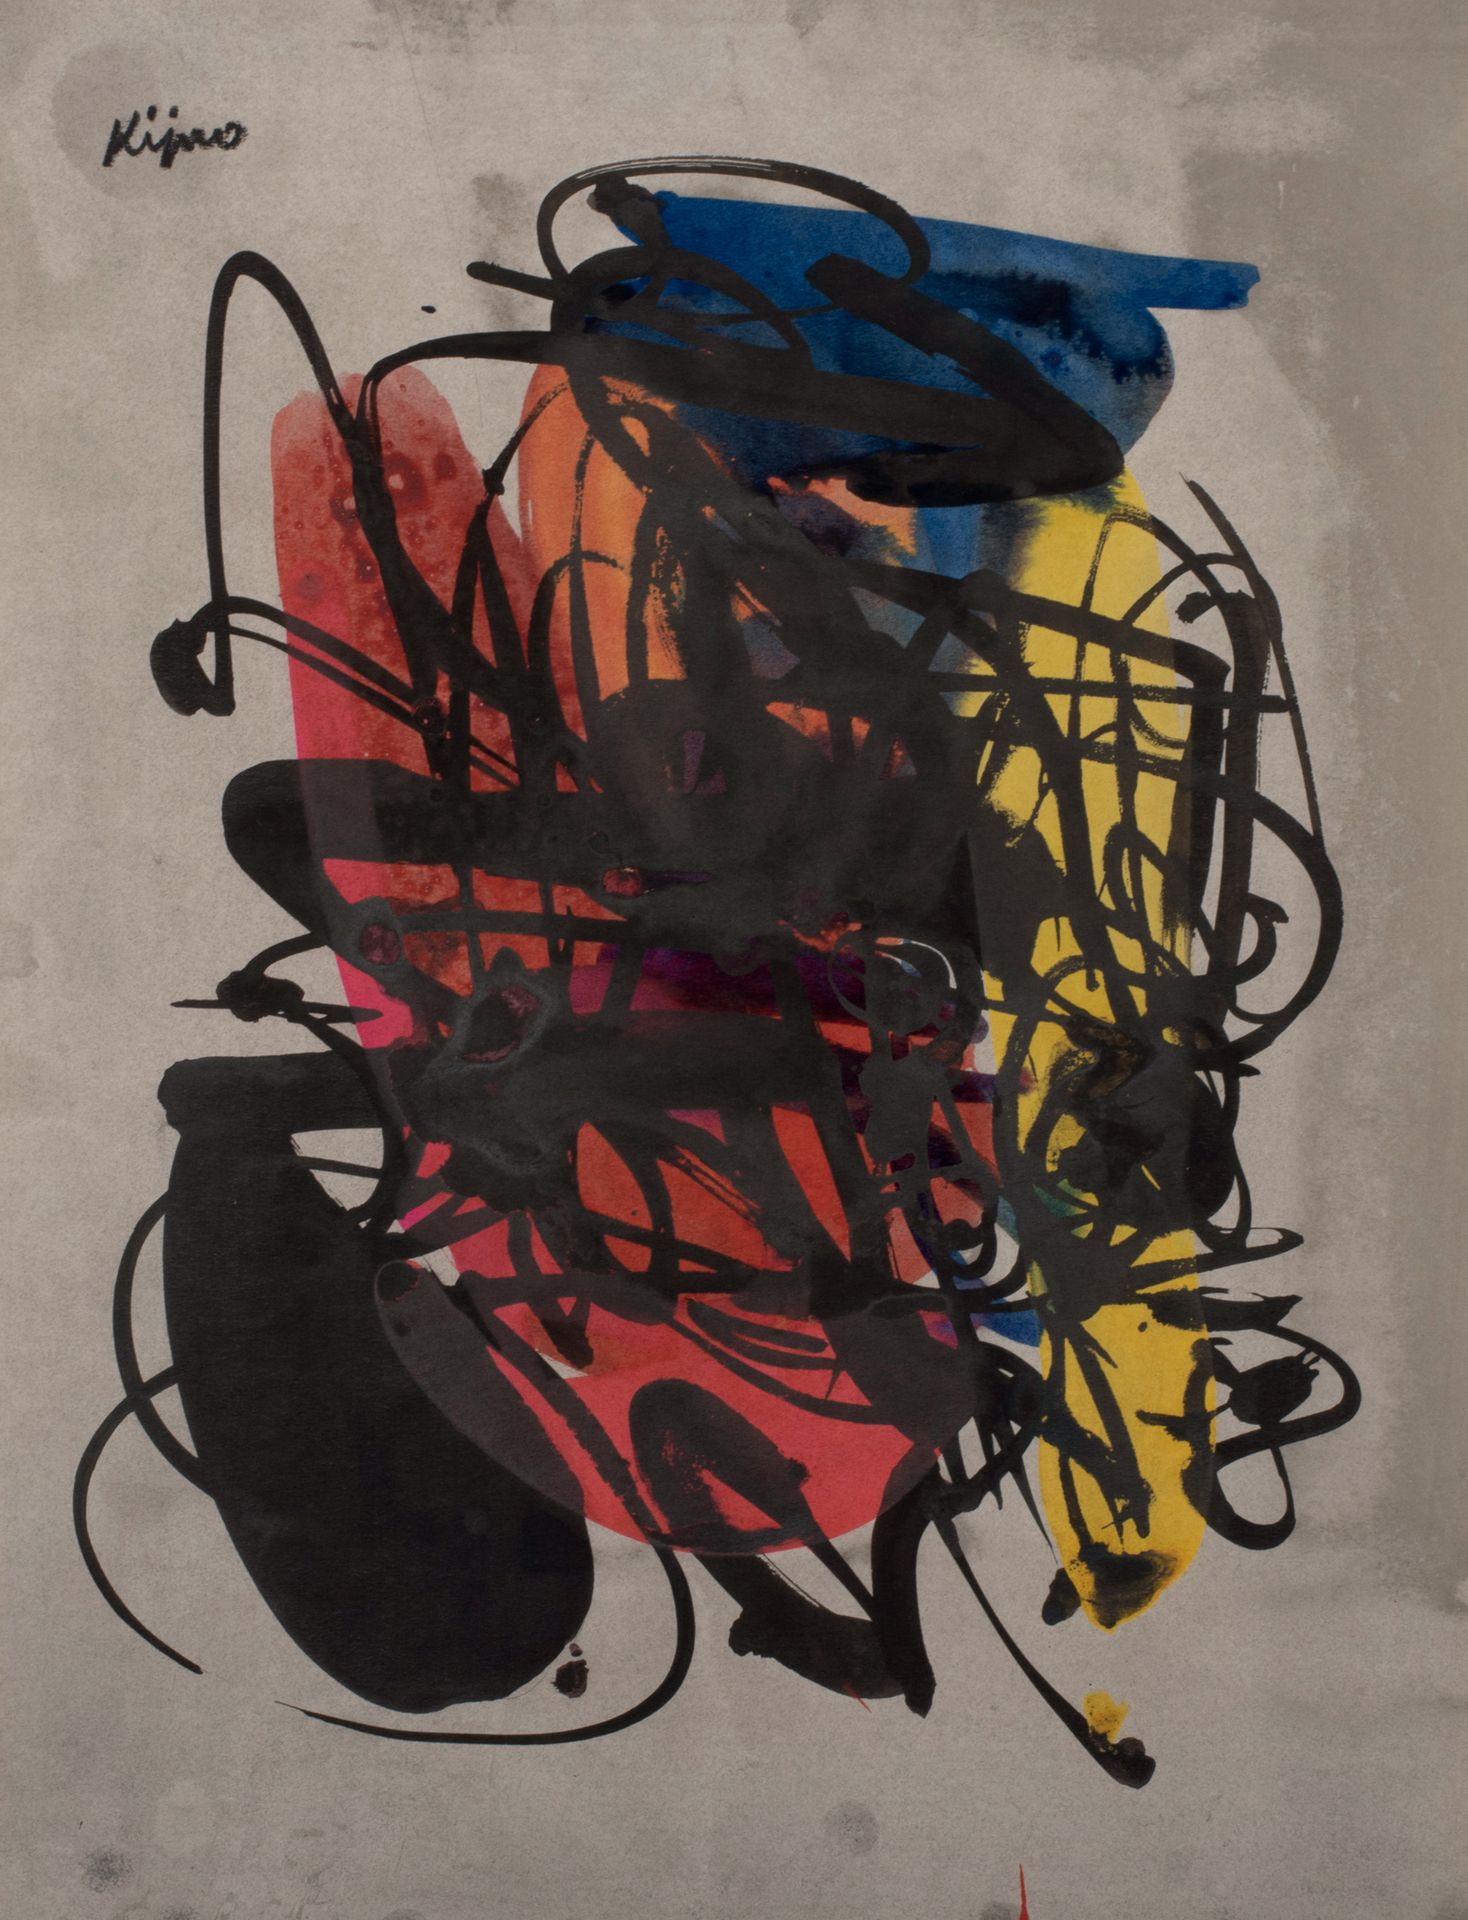 Ladislas KIJNO (1921-2012) 作文
混合媒体（水粉和墨水），左上角签名 41 x 31.2 cm